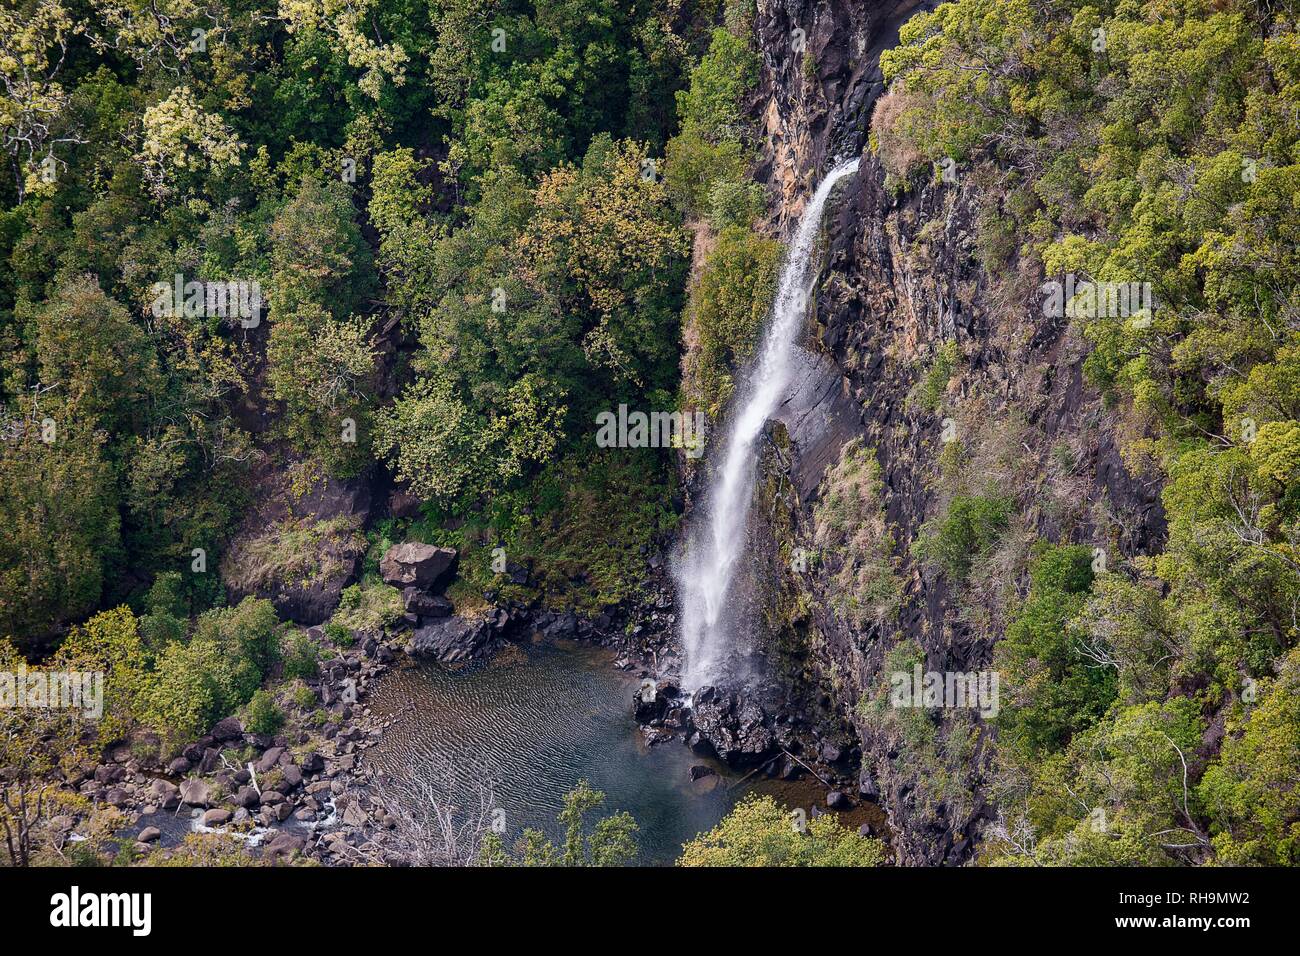 Waterfall in dense vegetation, aerial view, Kaua'i, Hawai'i, Polynesia Stock Photo